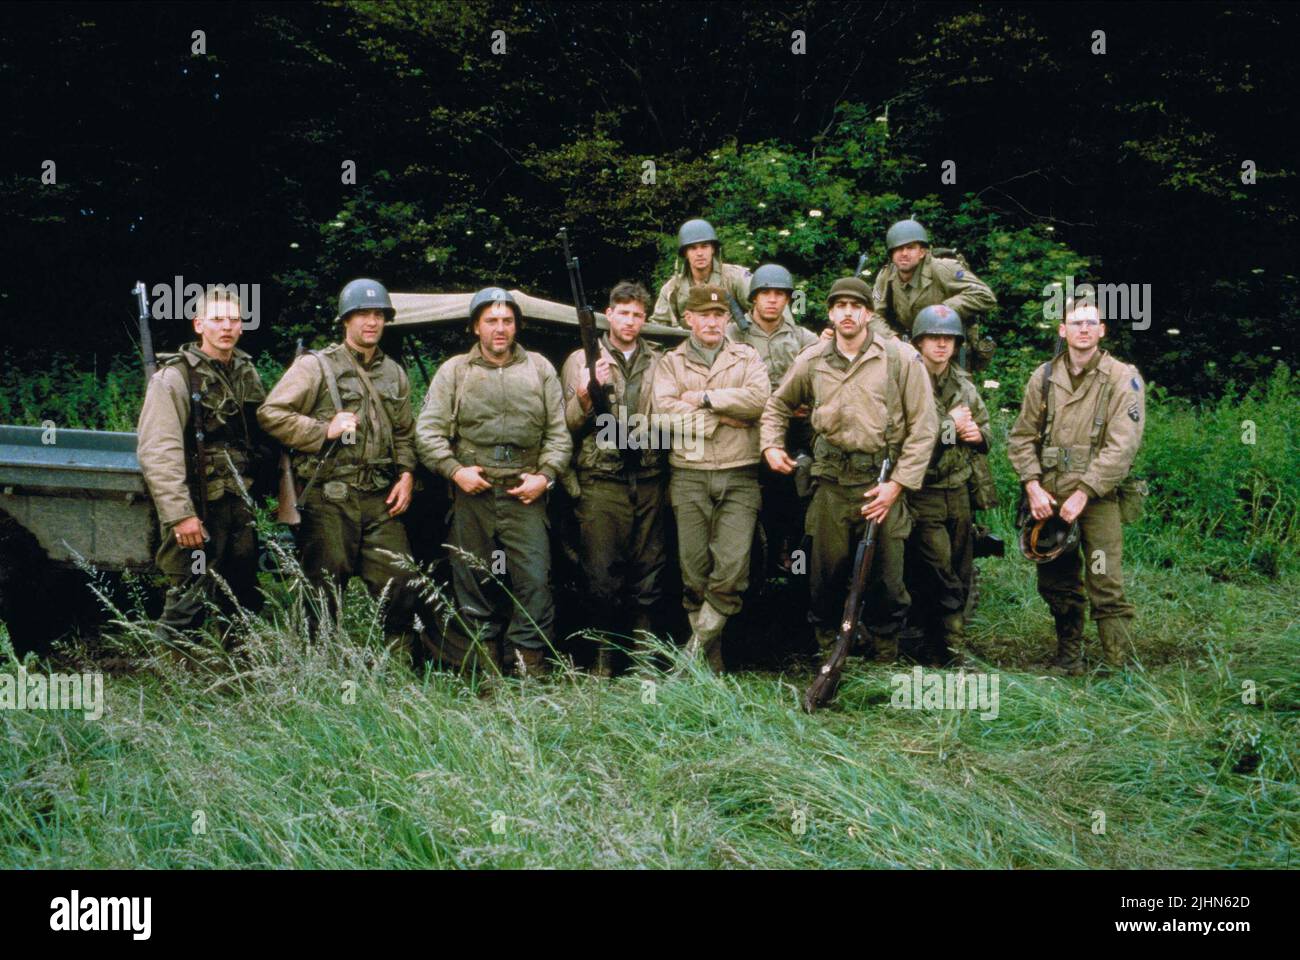 PEPPER,HANKS,SIZEMORE,BURNS,DYE,DIESEL,GOLDBERG,RIBISI,DAVIES, SAVING PRIVATE RYAN, 1998 Stock Photo